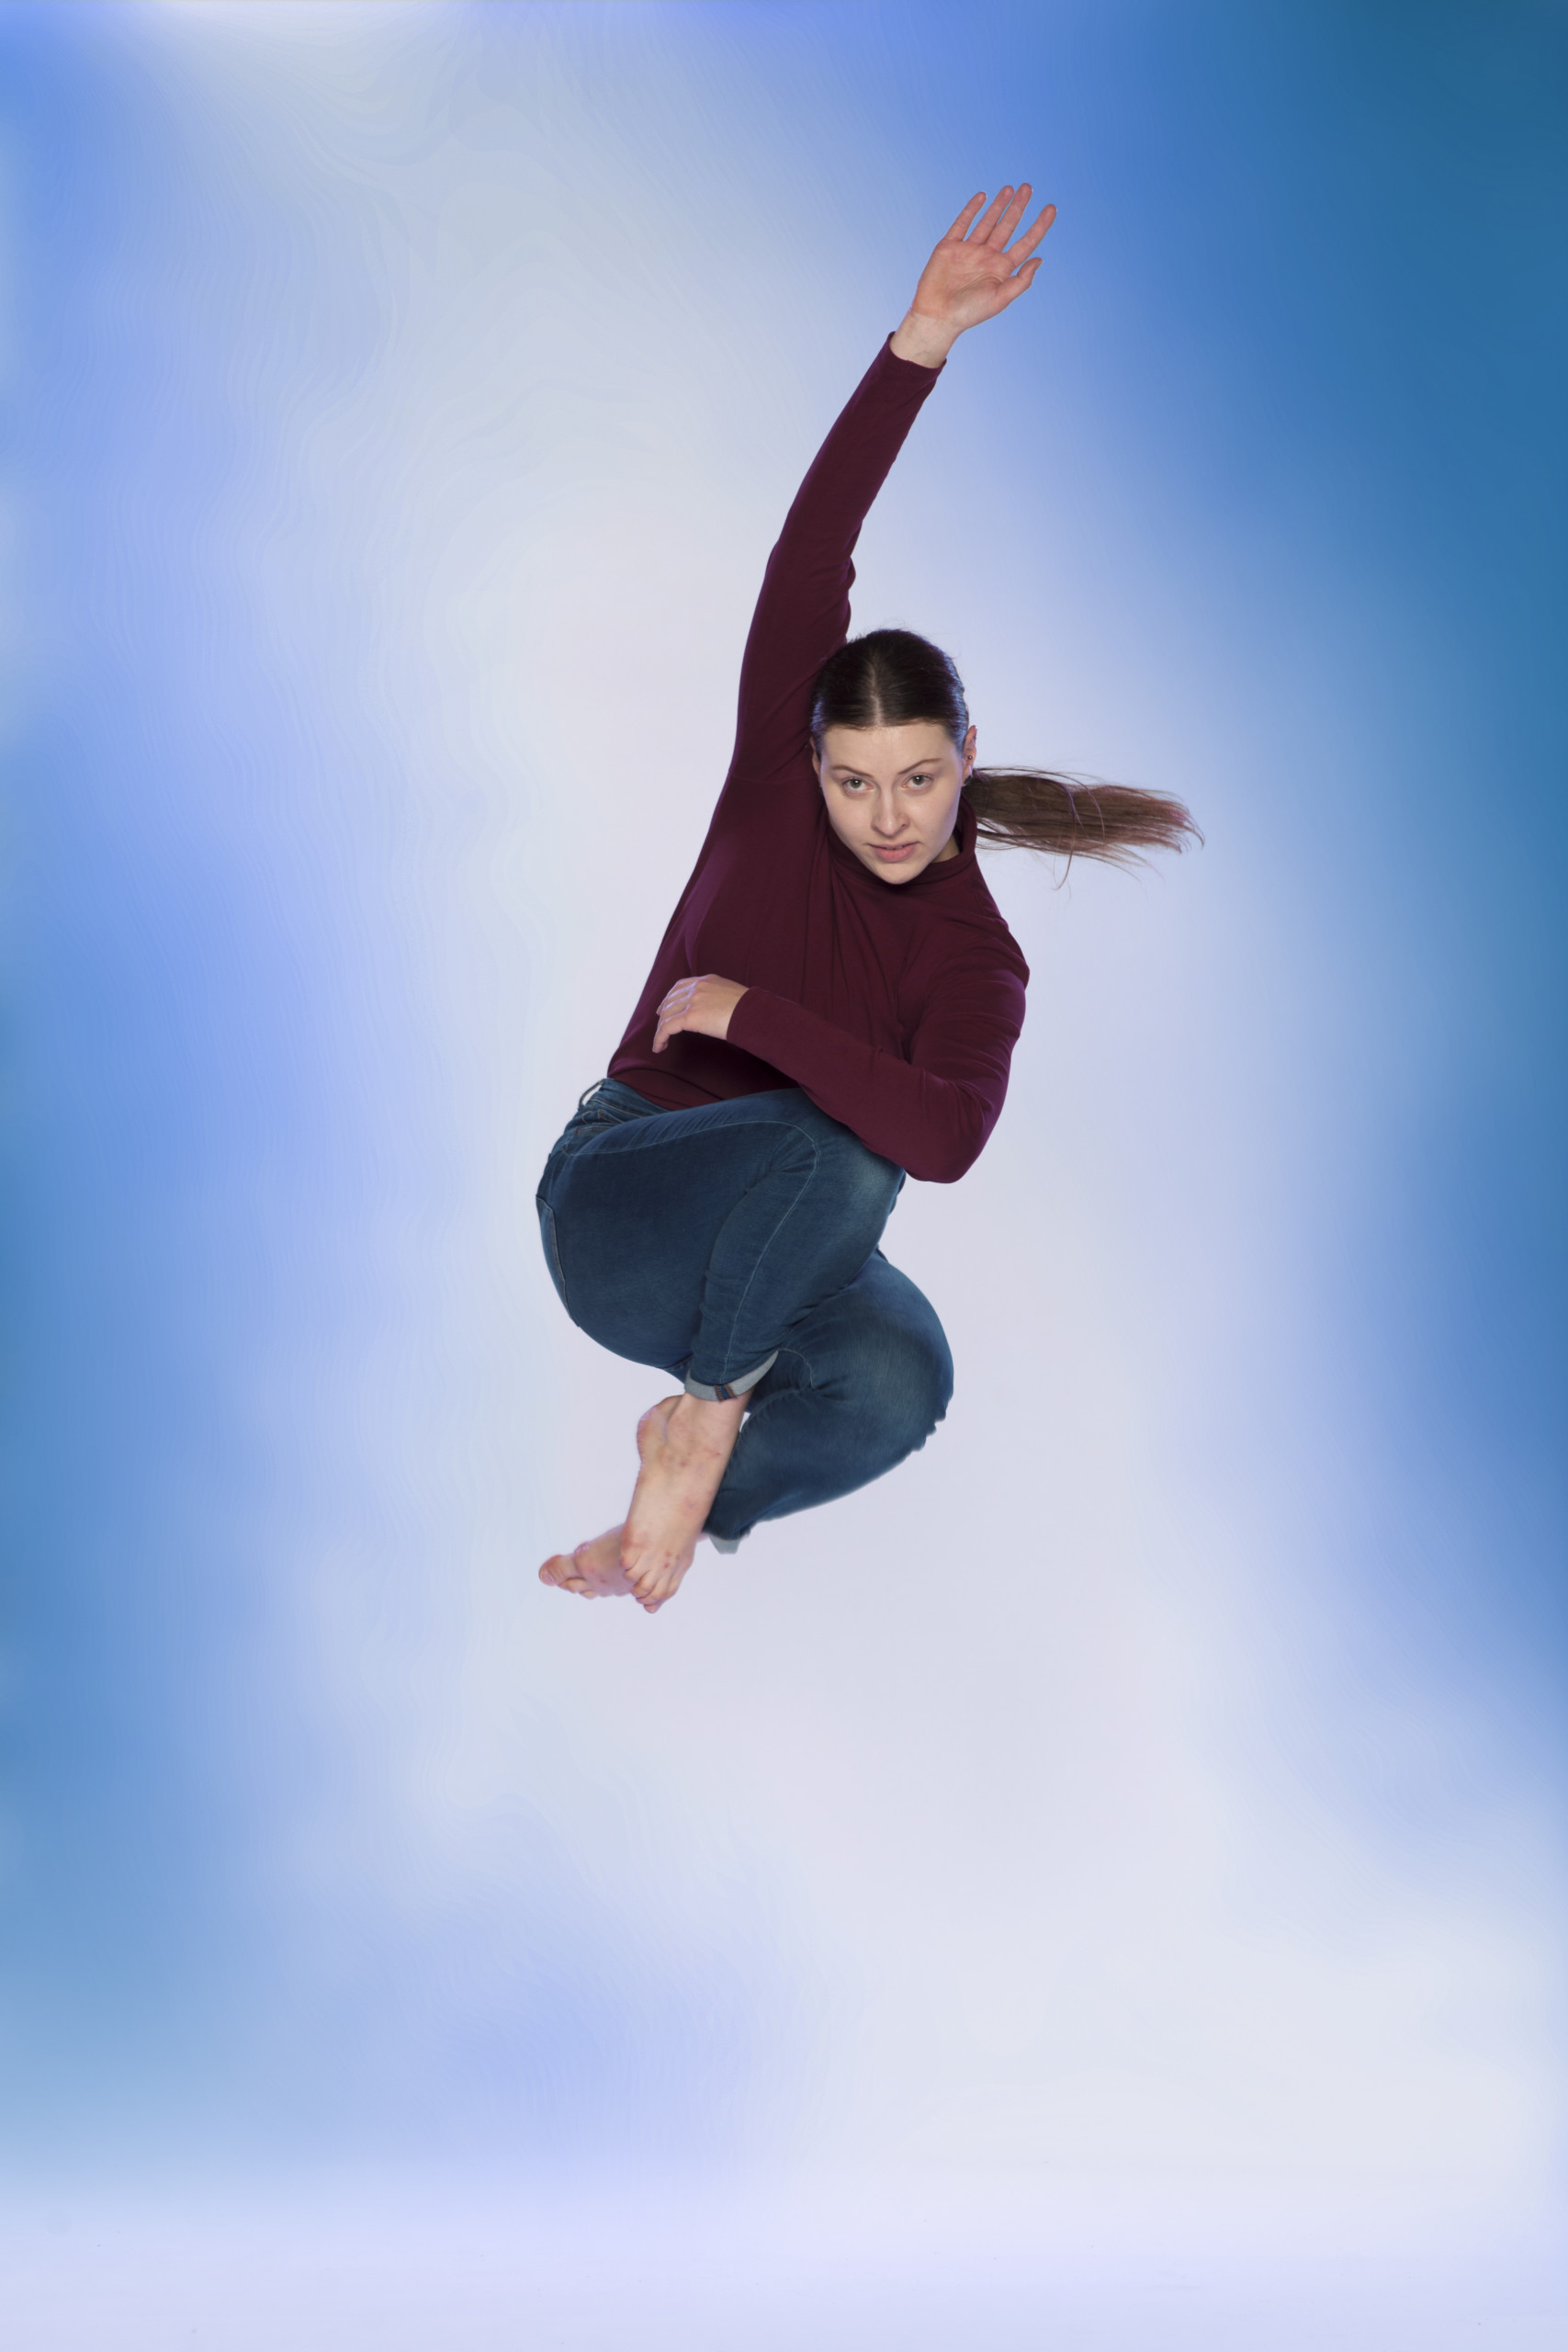 Agnieszka jumping